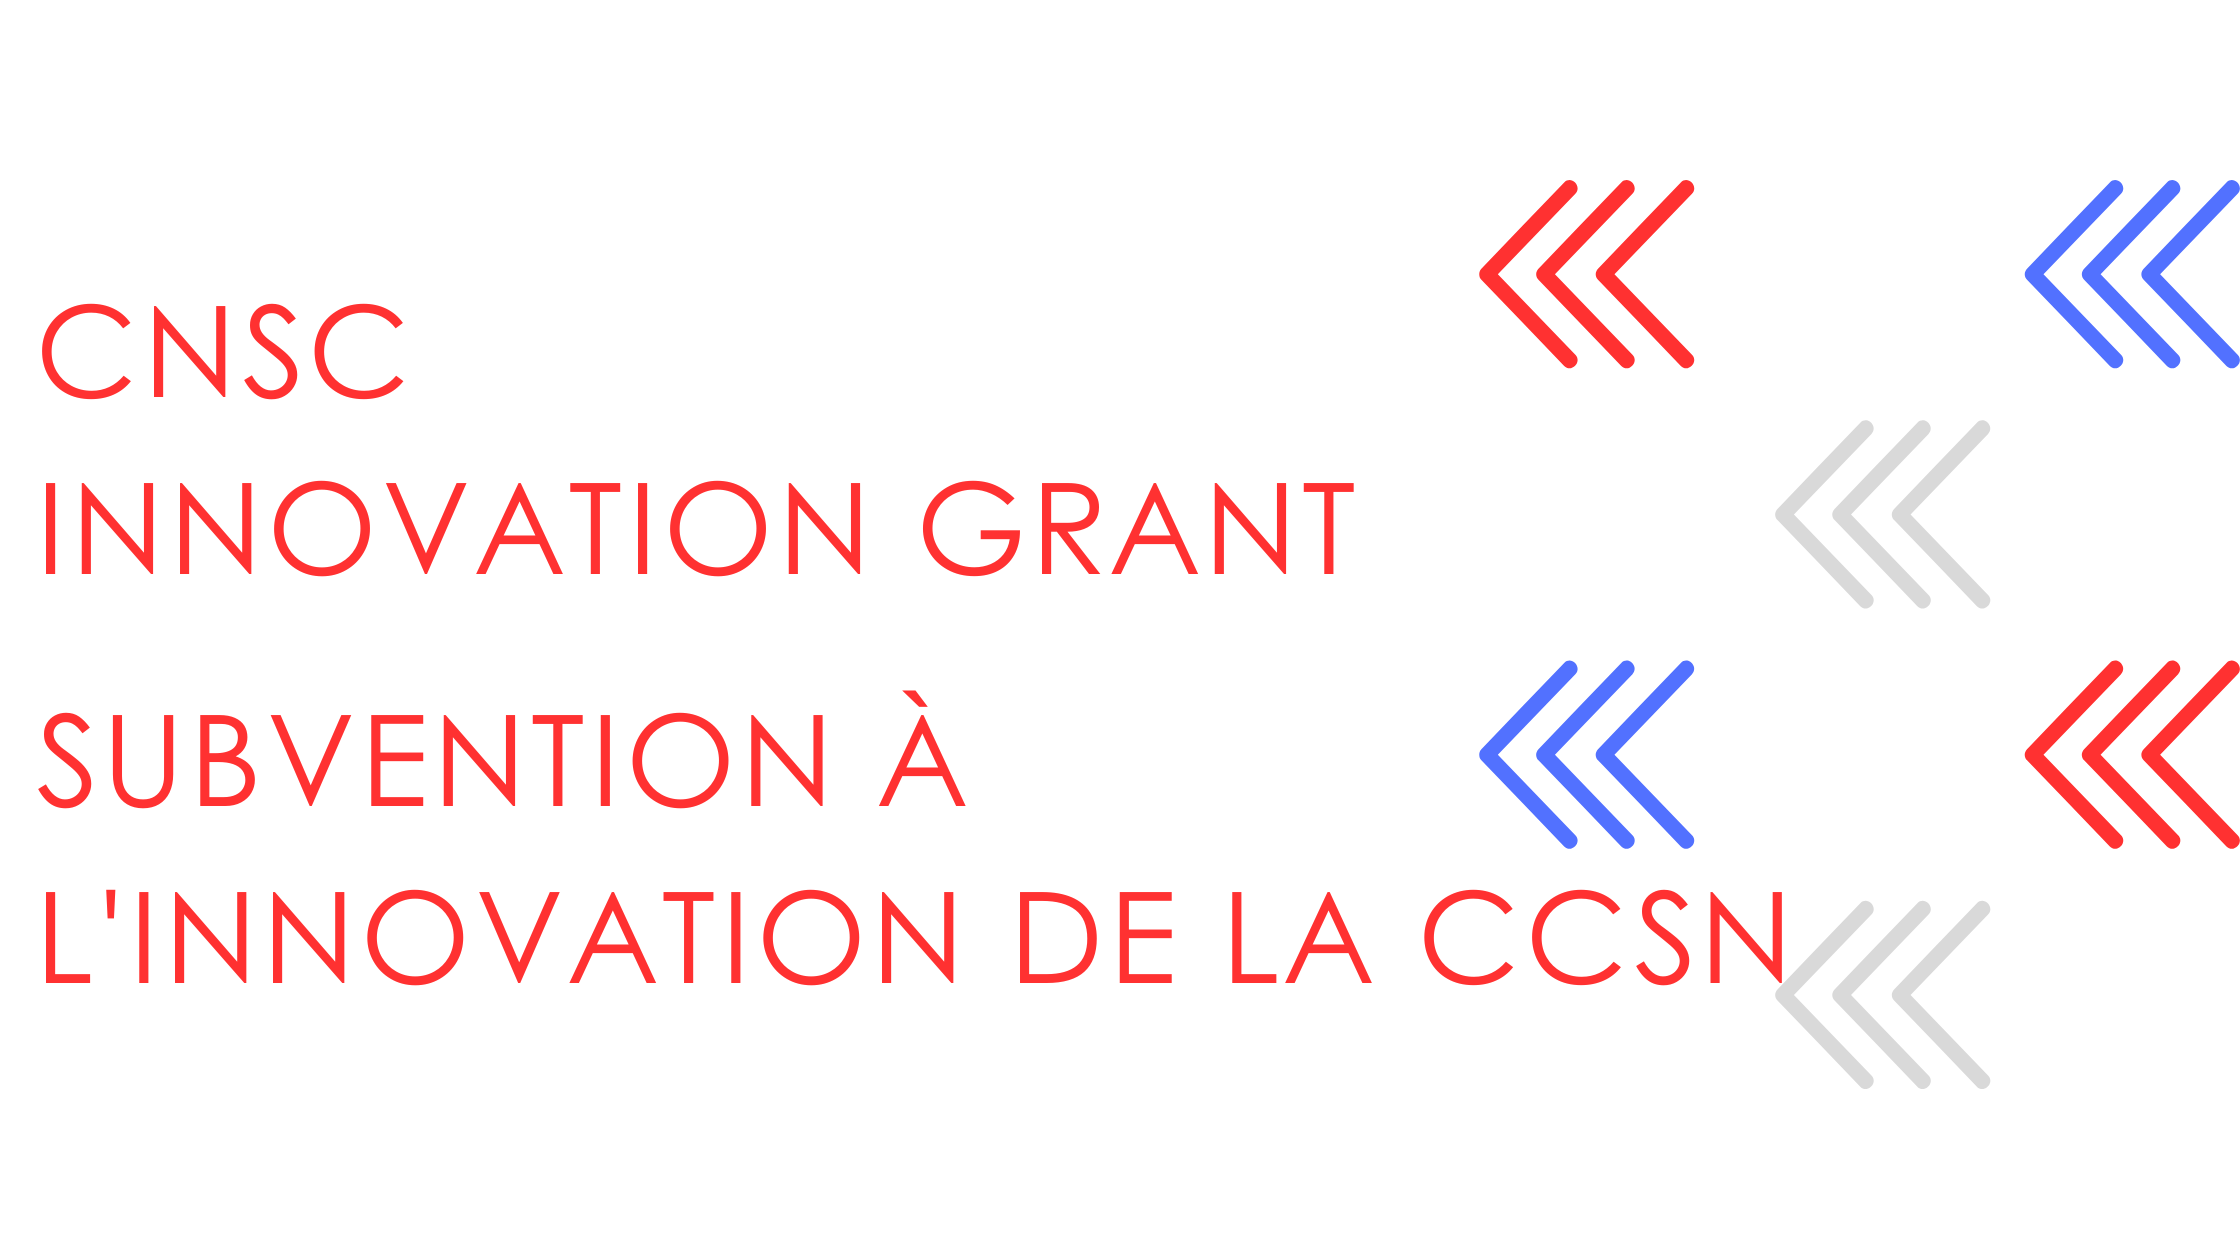 Innovation Grant Ebroadcast banner